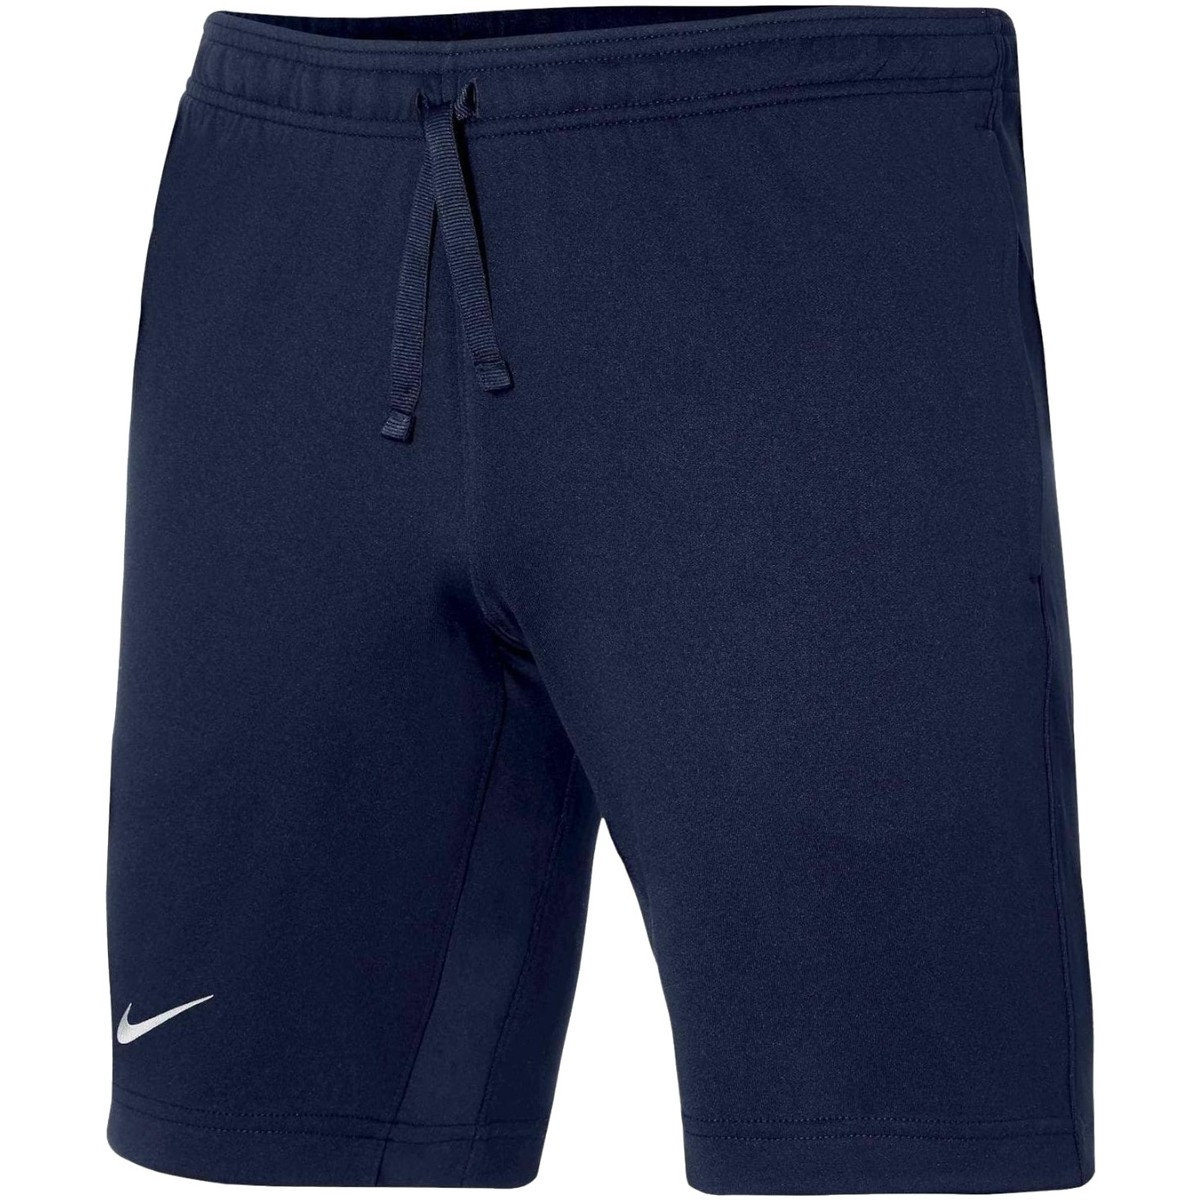 Îmbracaminte Bărbați Pantaloni trei sferturi Nike Strike22 KZ Short albastru